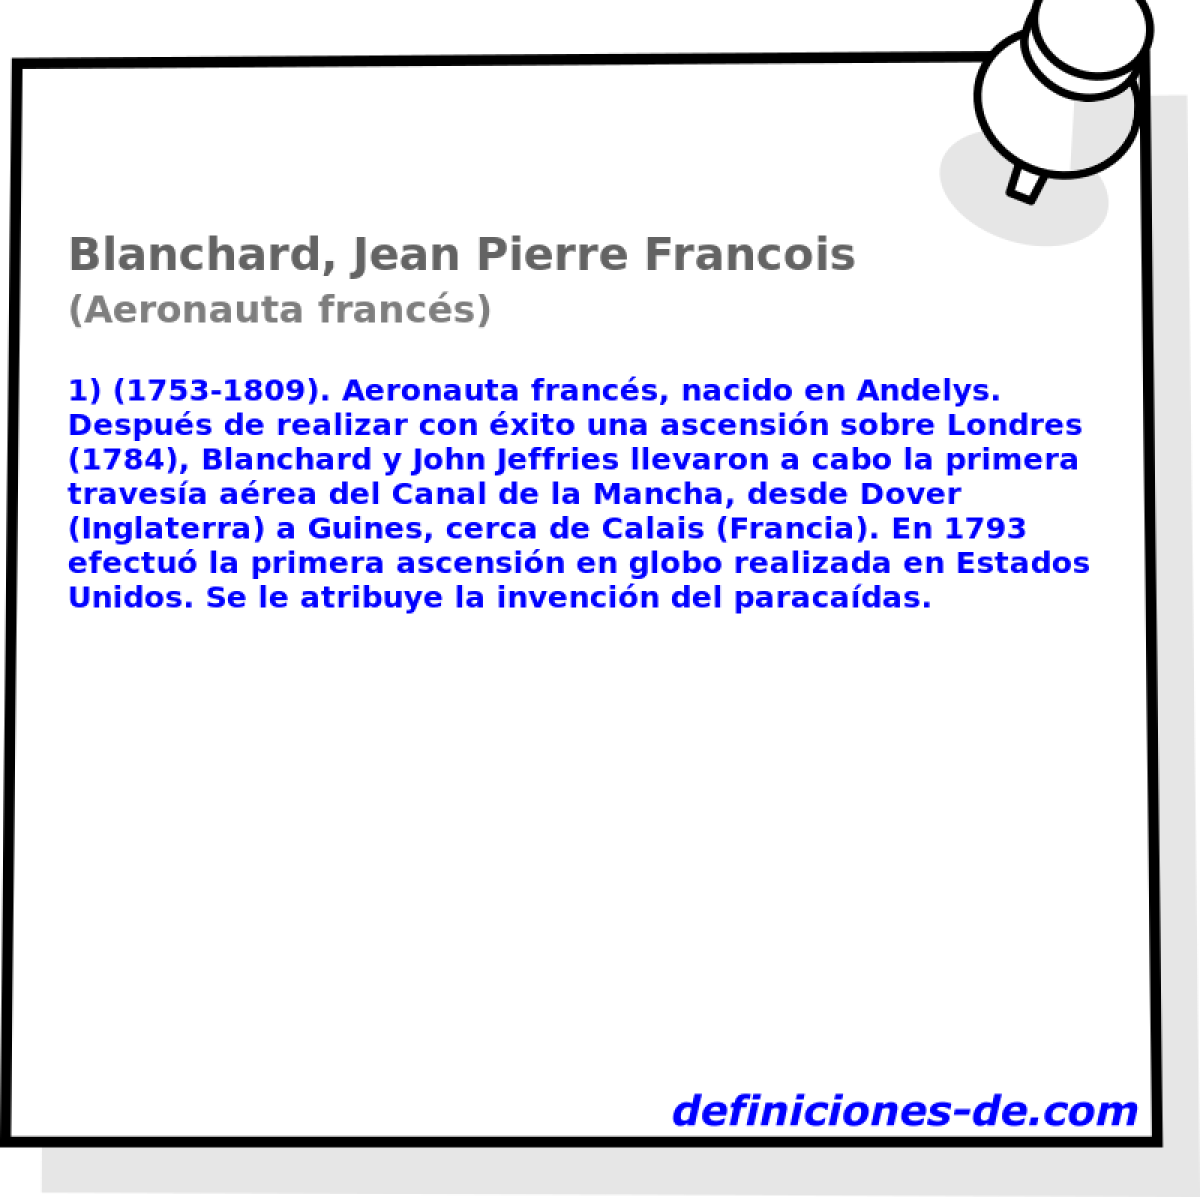 Blanchard, Jean Pierre Francois (Aeronauta francs)